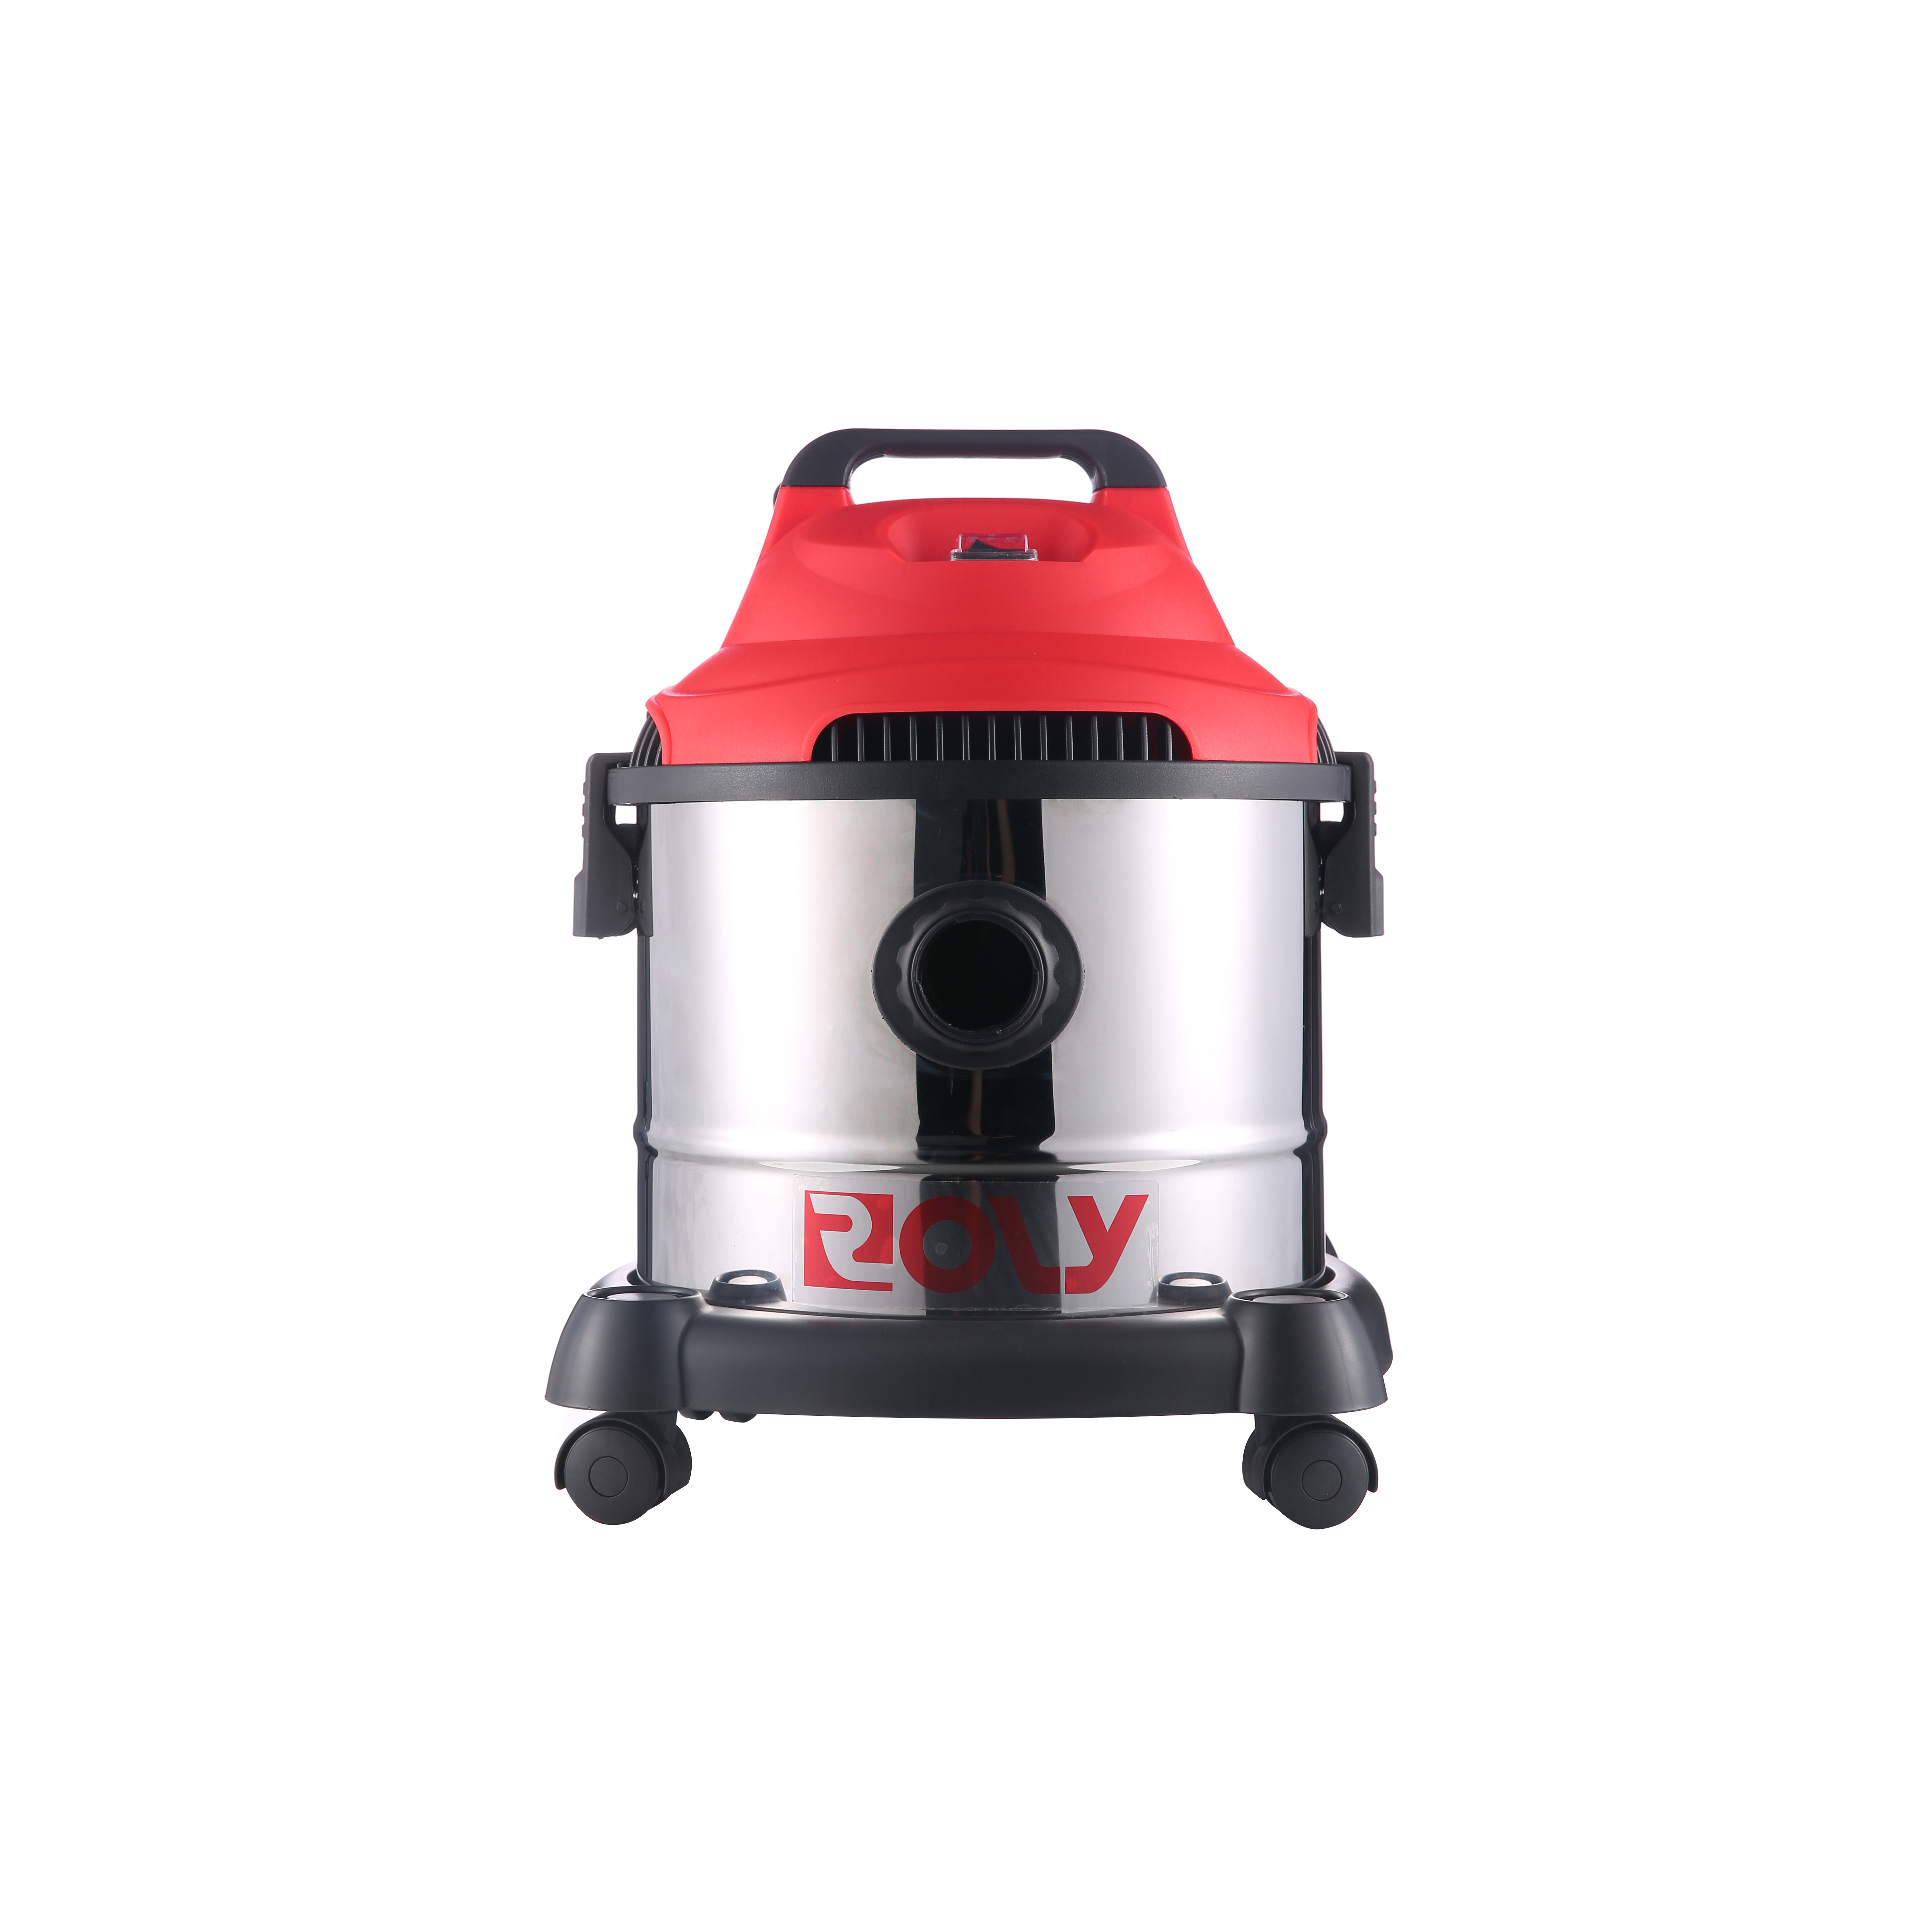 RL128 customized big power hepa filter vacuum cleaner